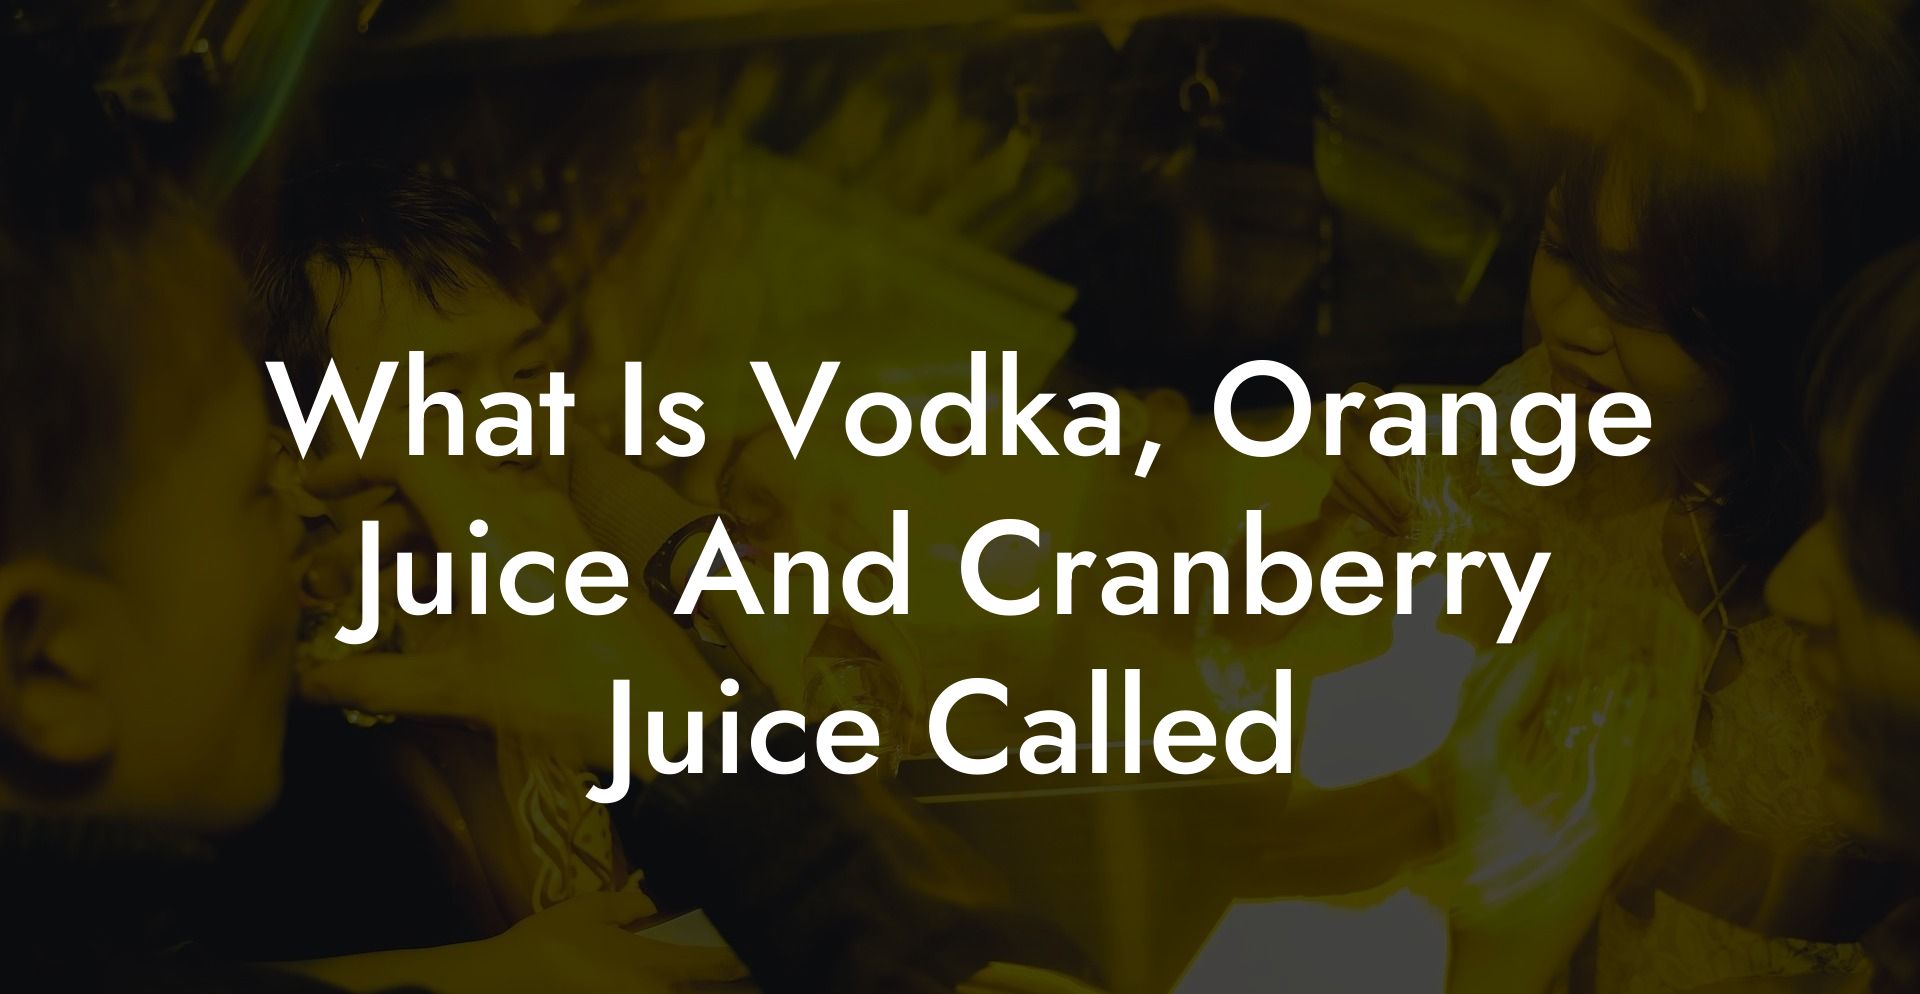 What Is Vodka, Orange Juice And Cranberry Juice Called